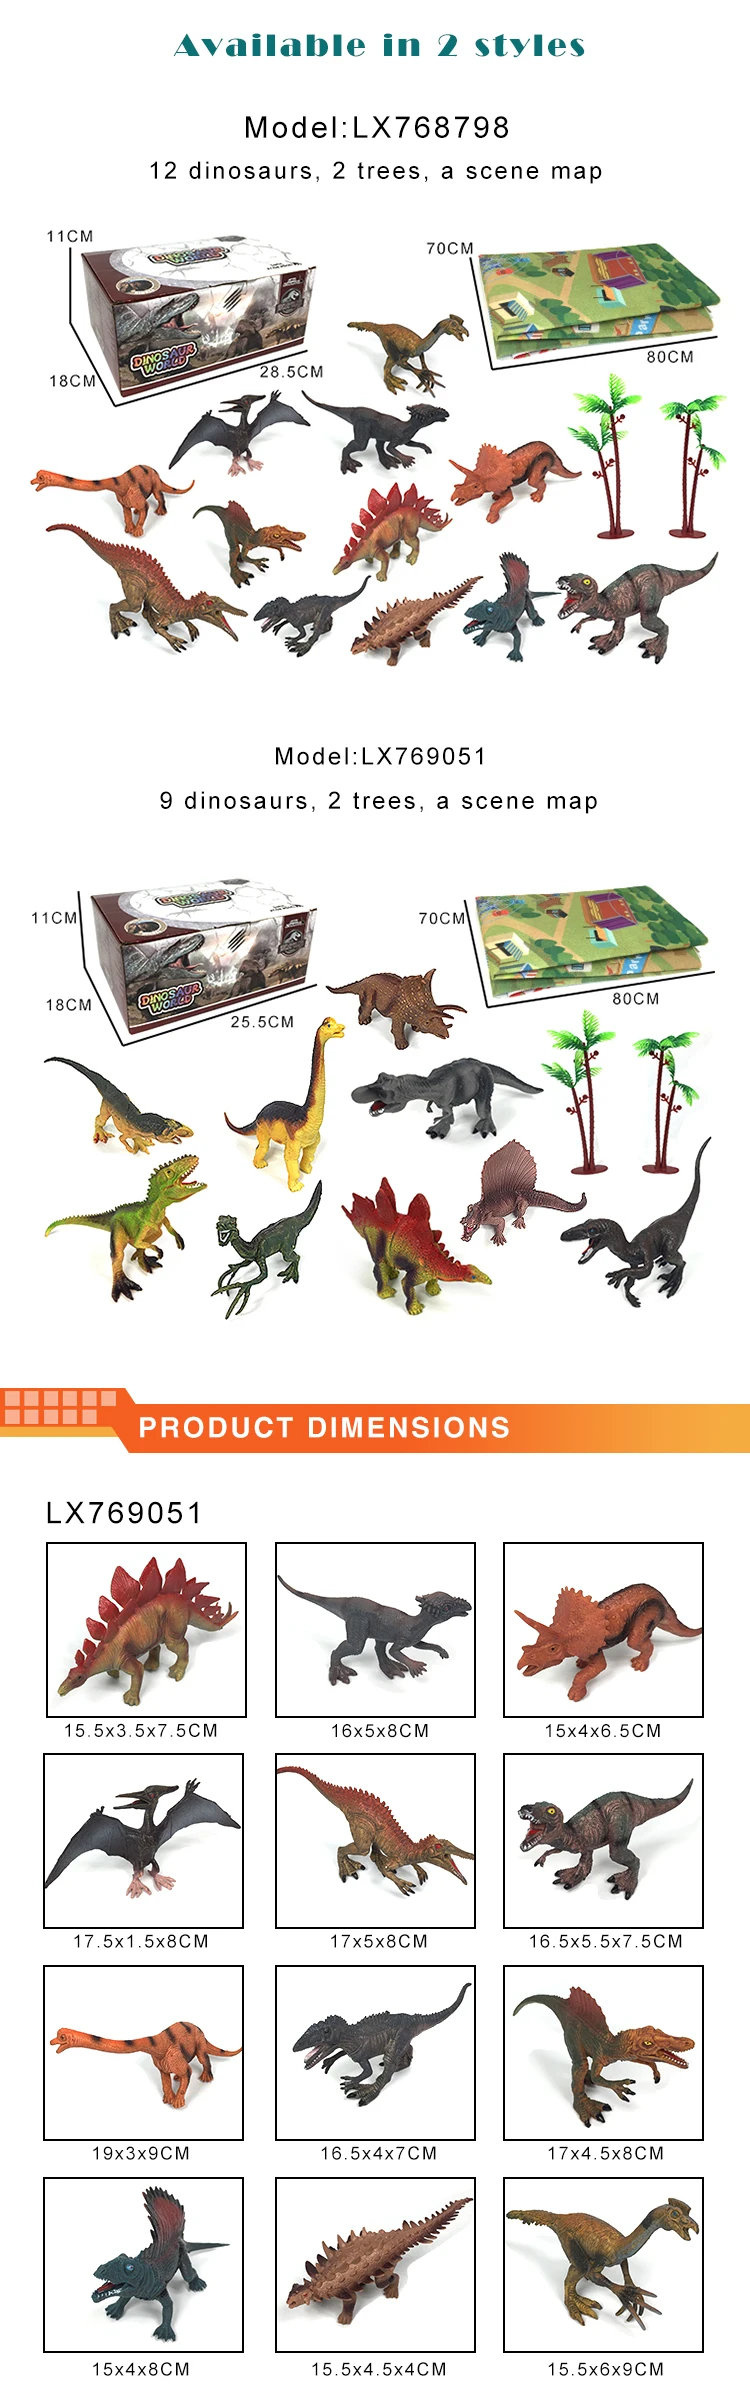 New arrival 12 models simulation small dinosaur early education science dinosaur toys